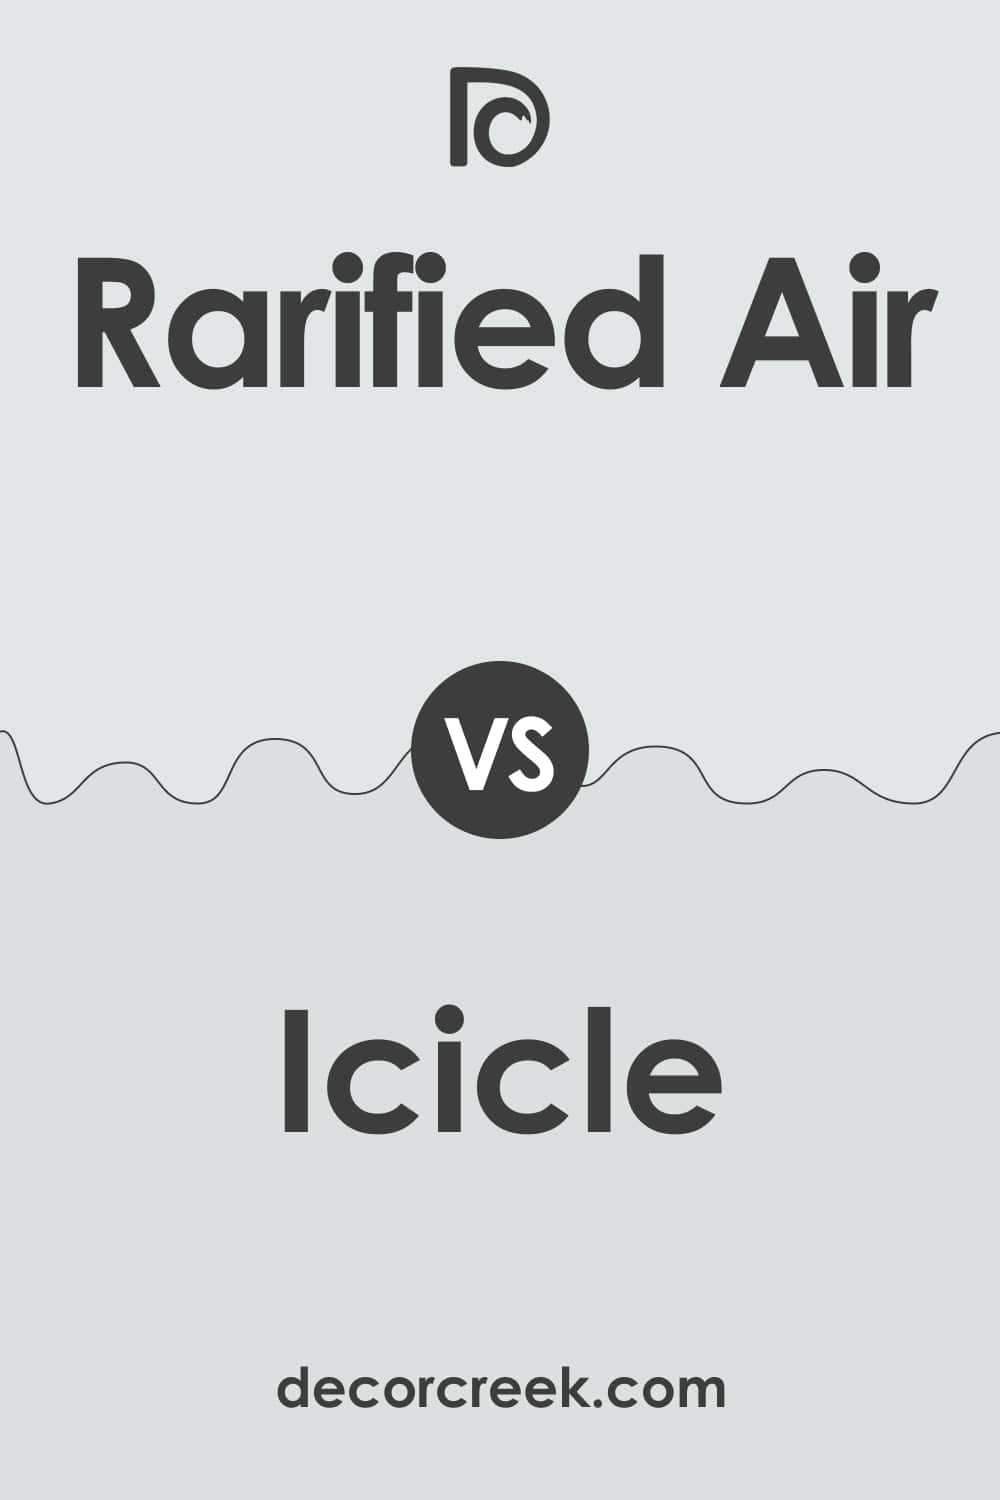 Rarified Air vs Icicle